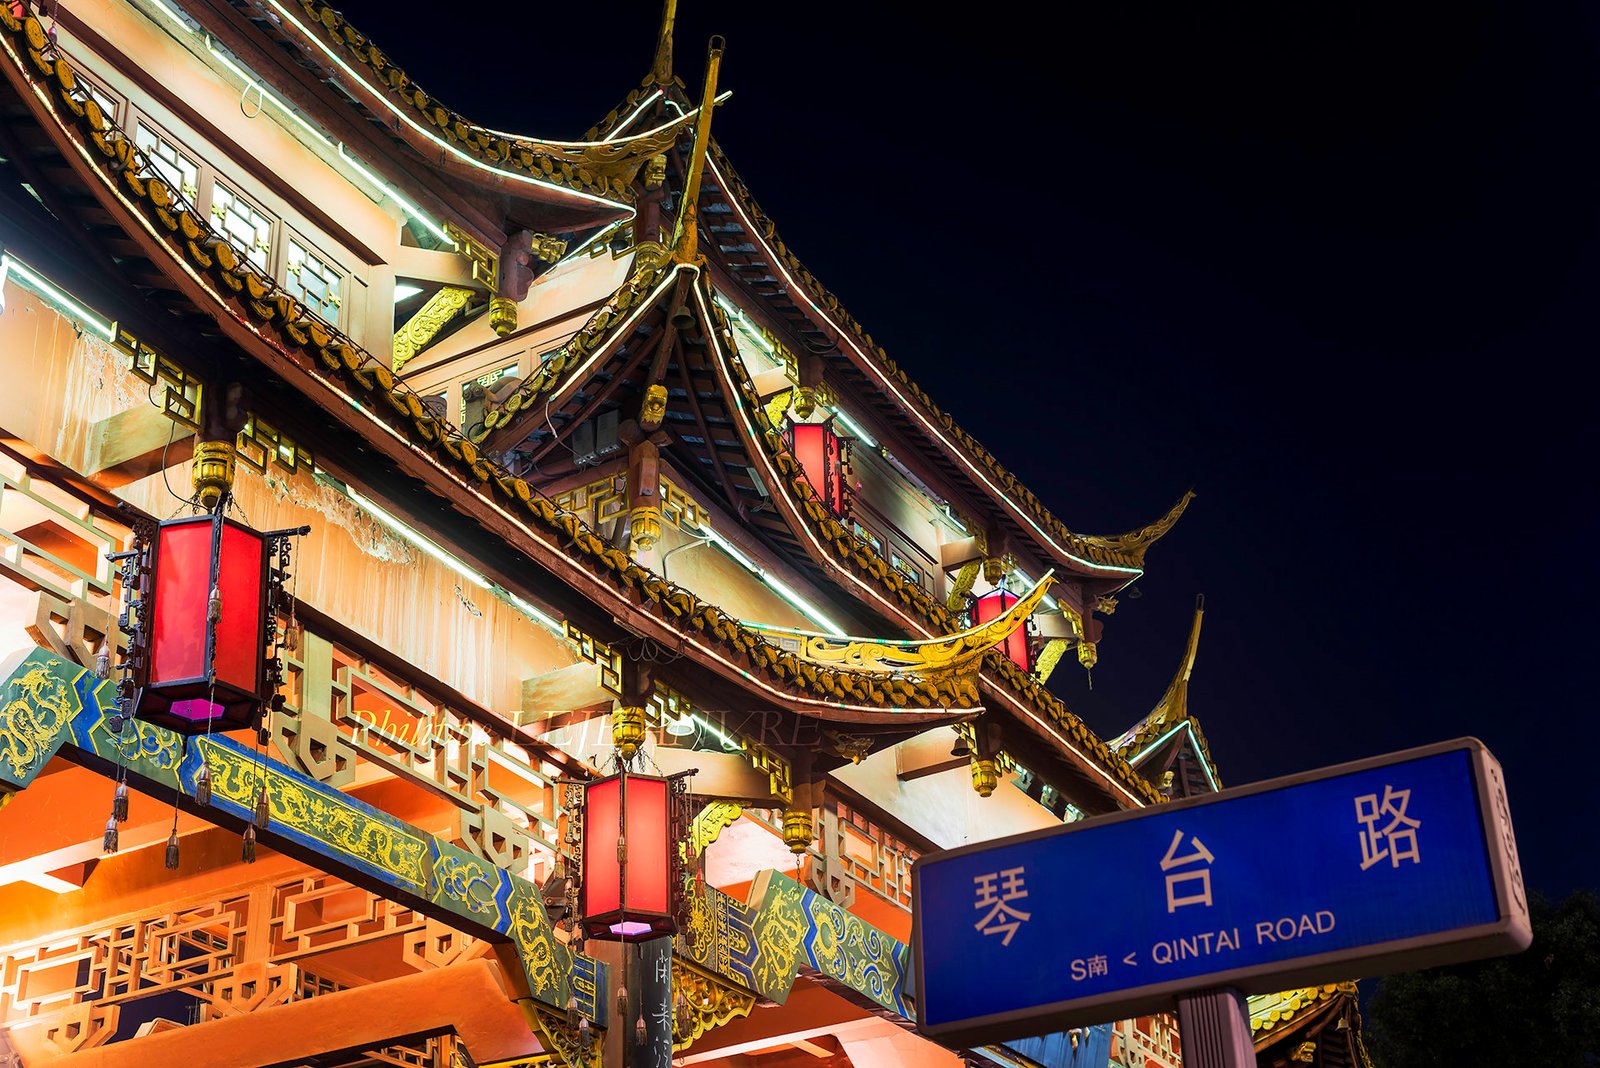 QinTaiLu gate illuminated at night in Chengdu, Sichuan province, China